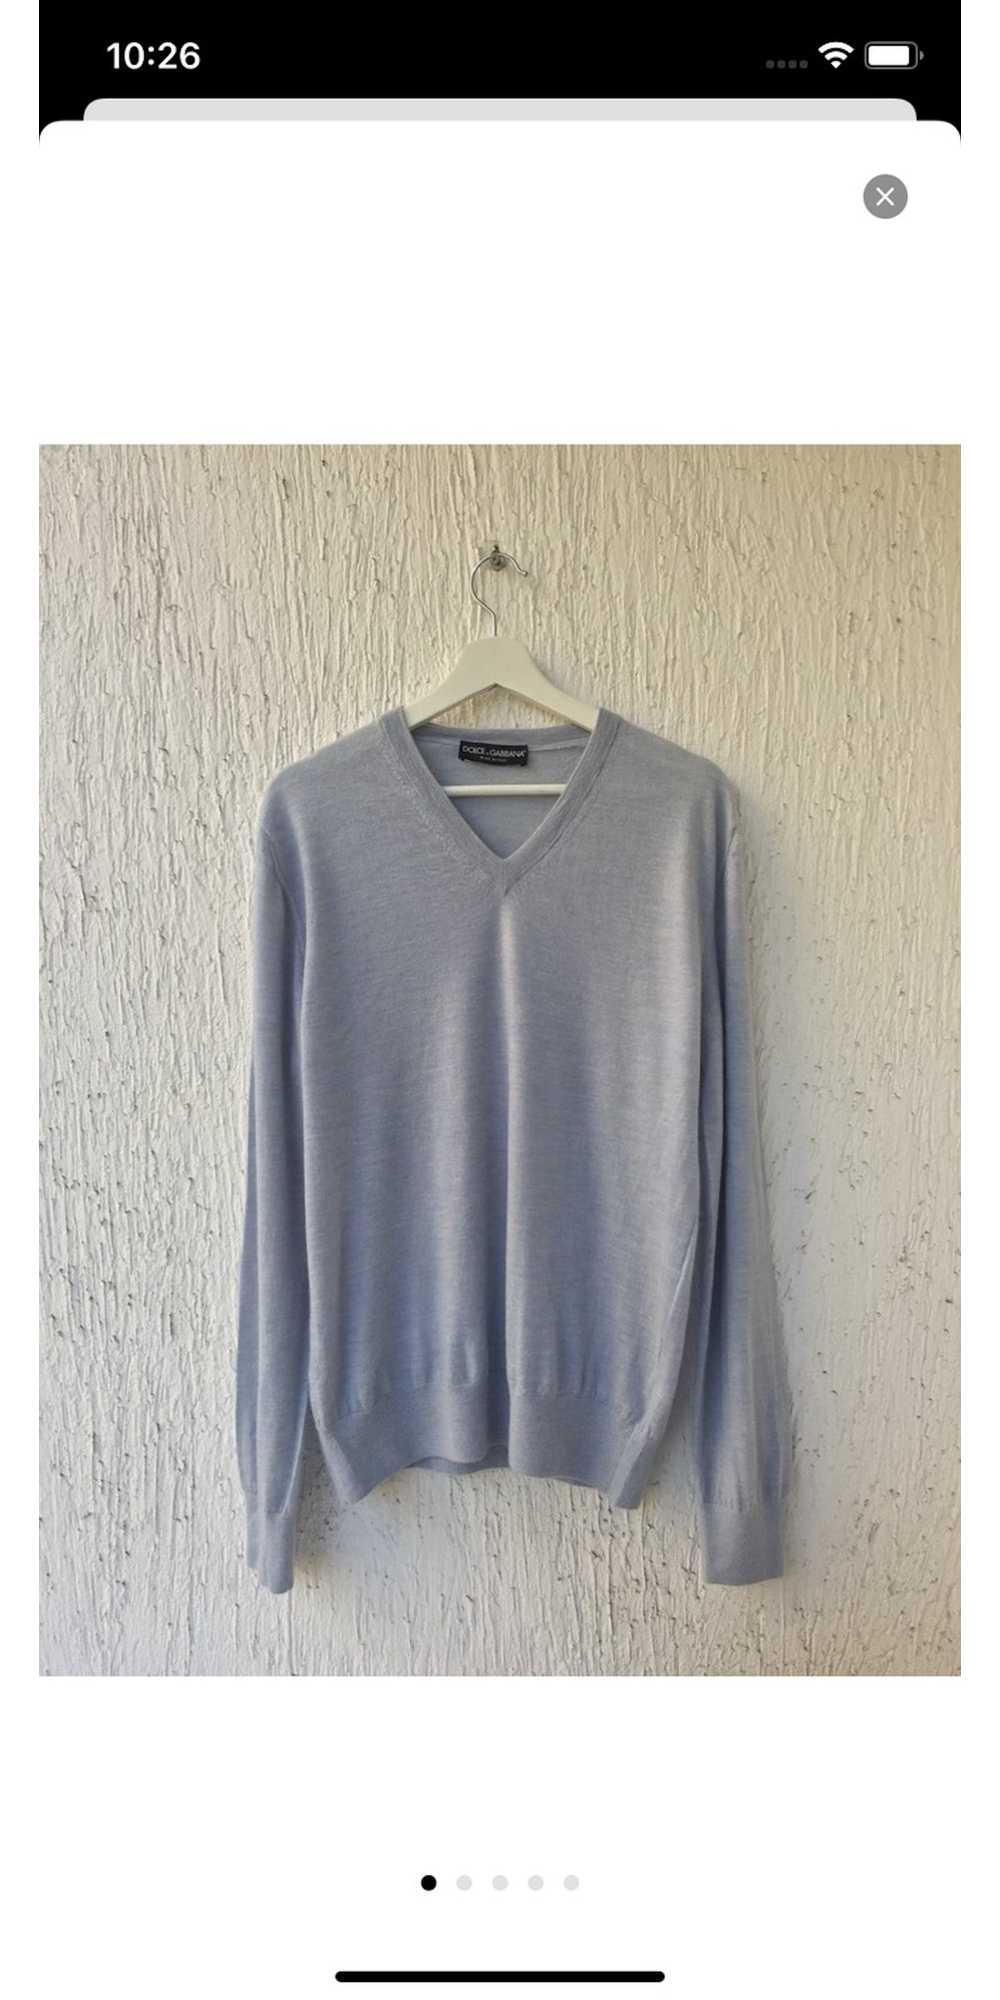 Dolce & Gabbana Light Blue Cashmere Sweater - image 1